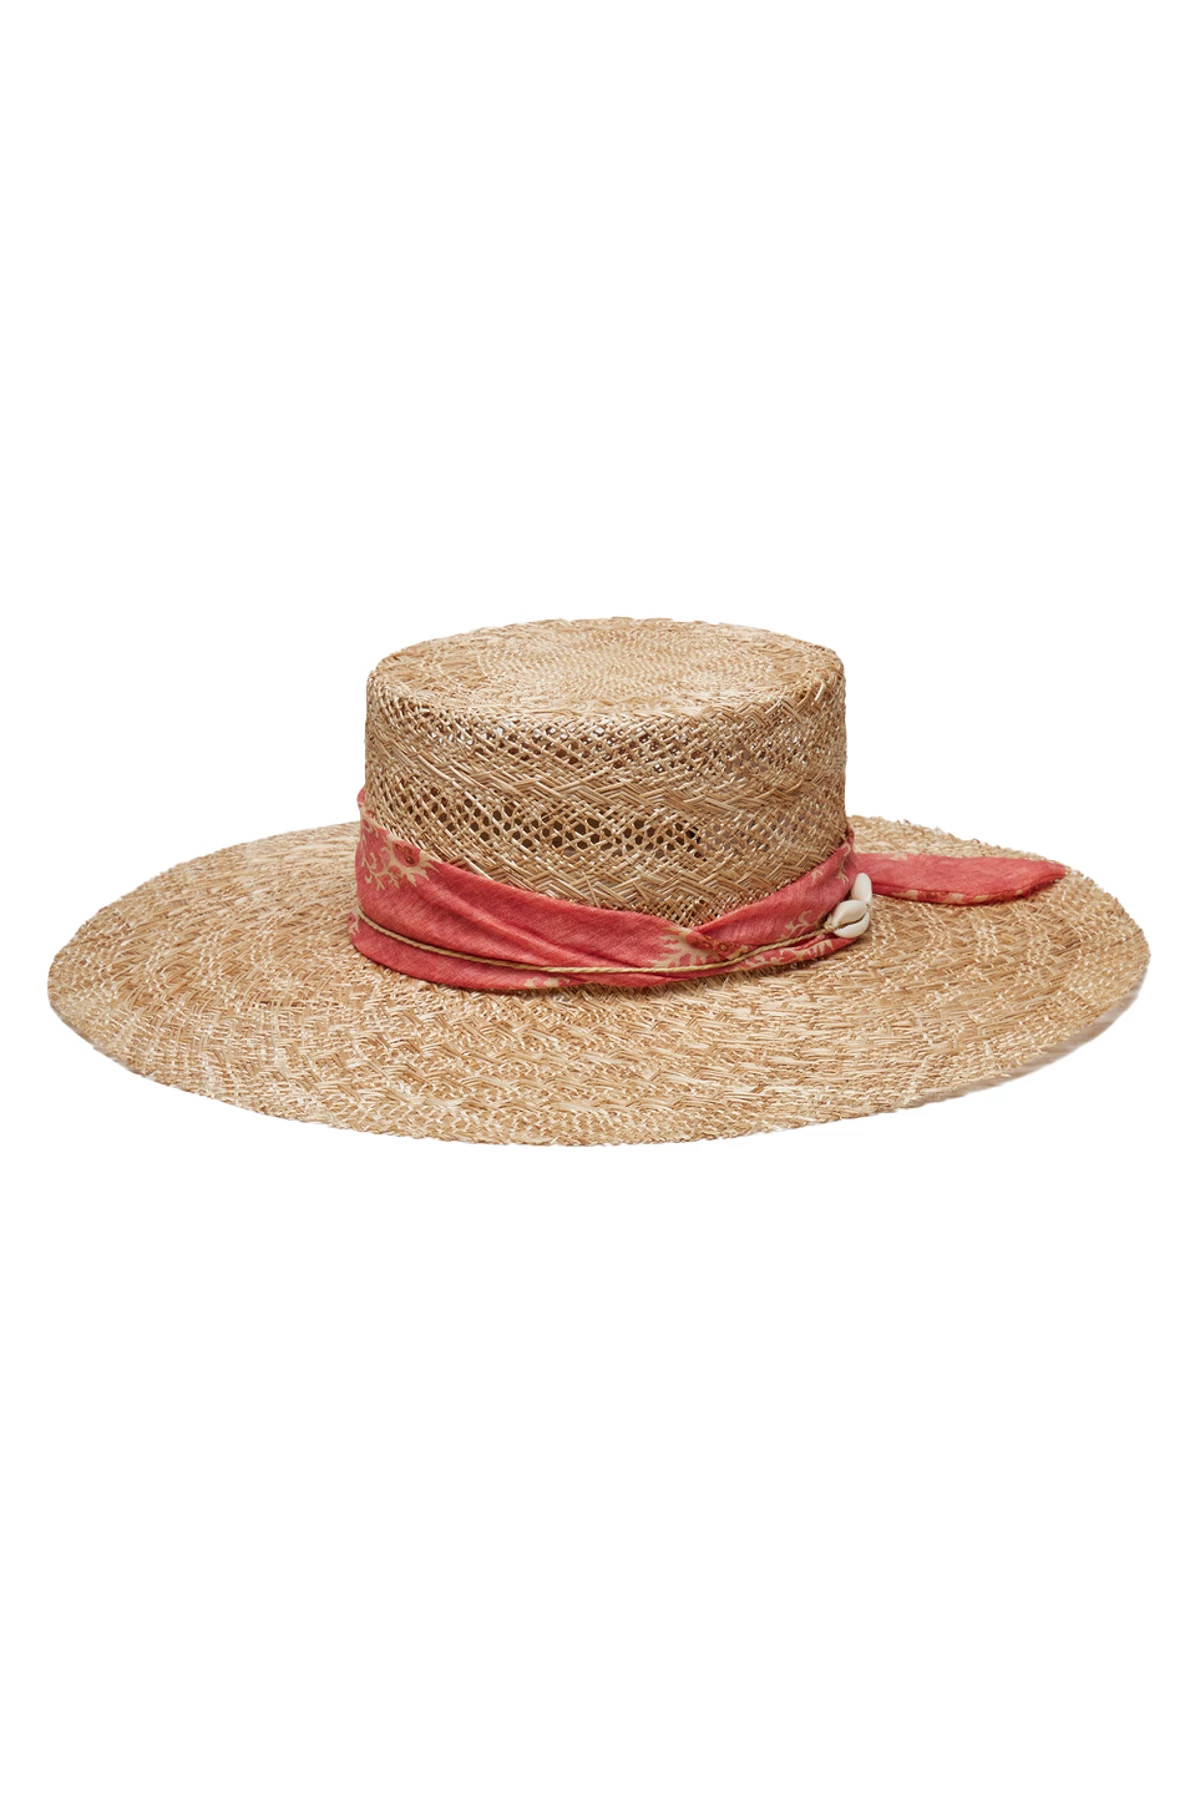 NATURAL Ivy Straw Boater Hat image number 1